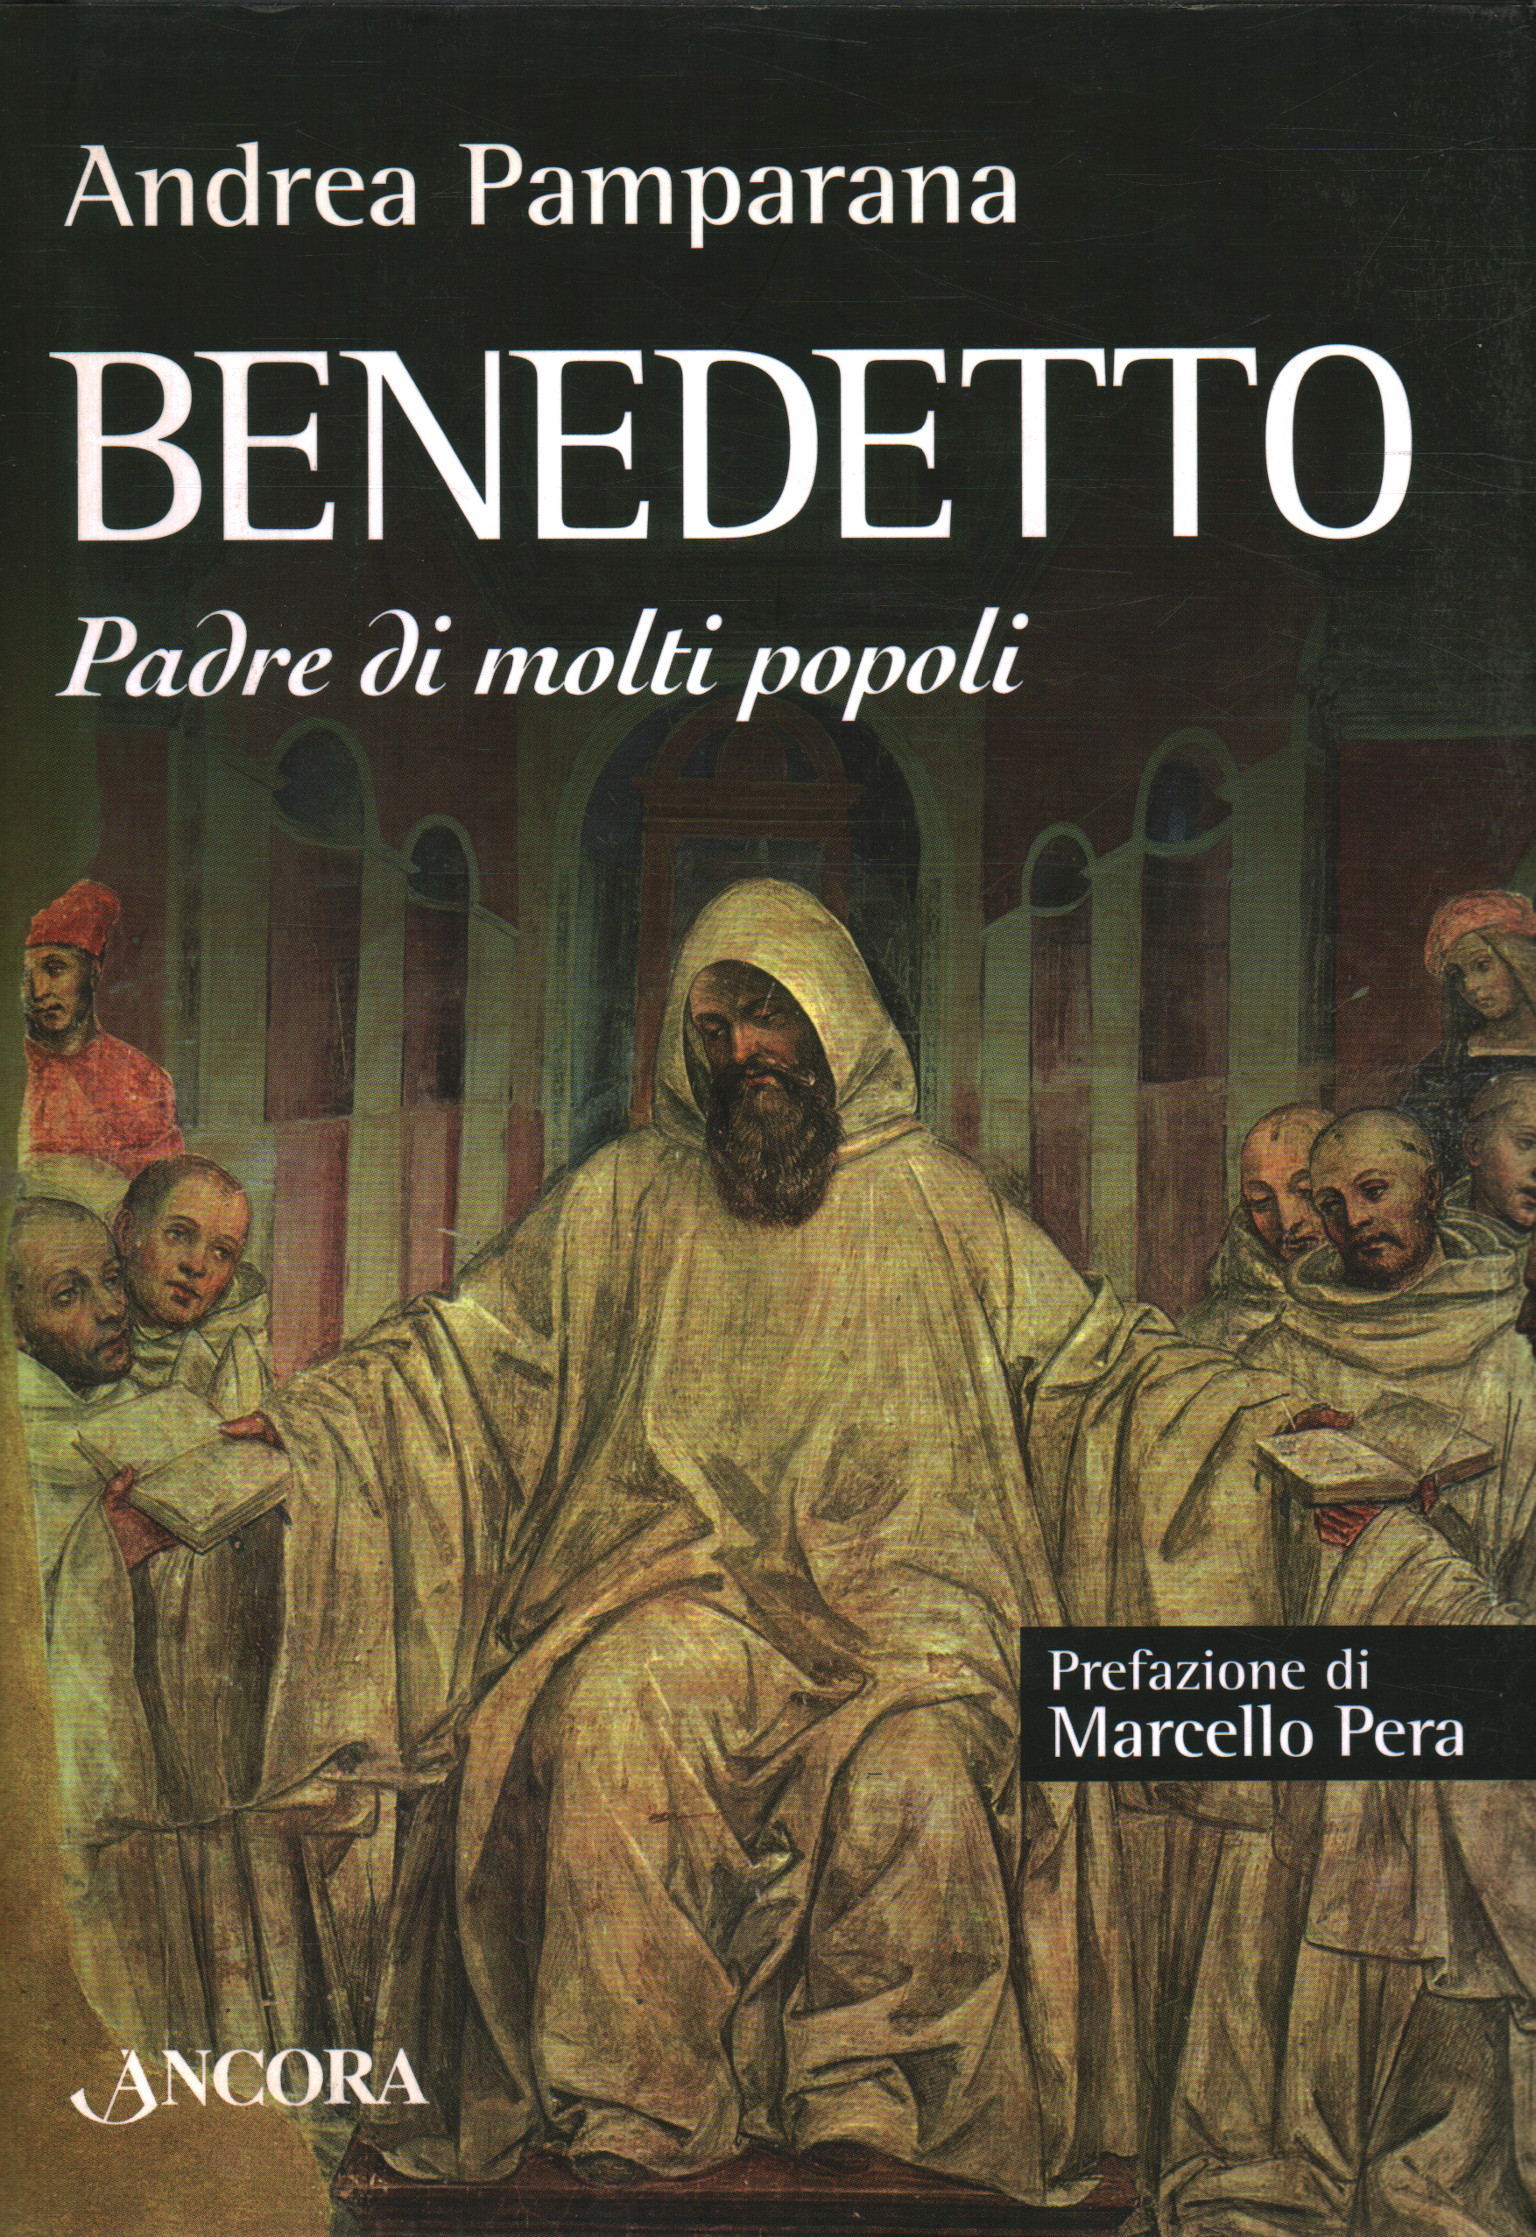 Benedict, Andrea Pamparana